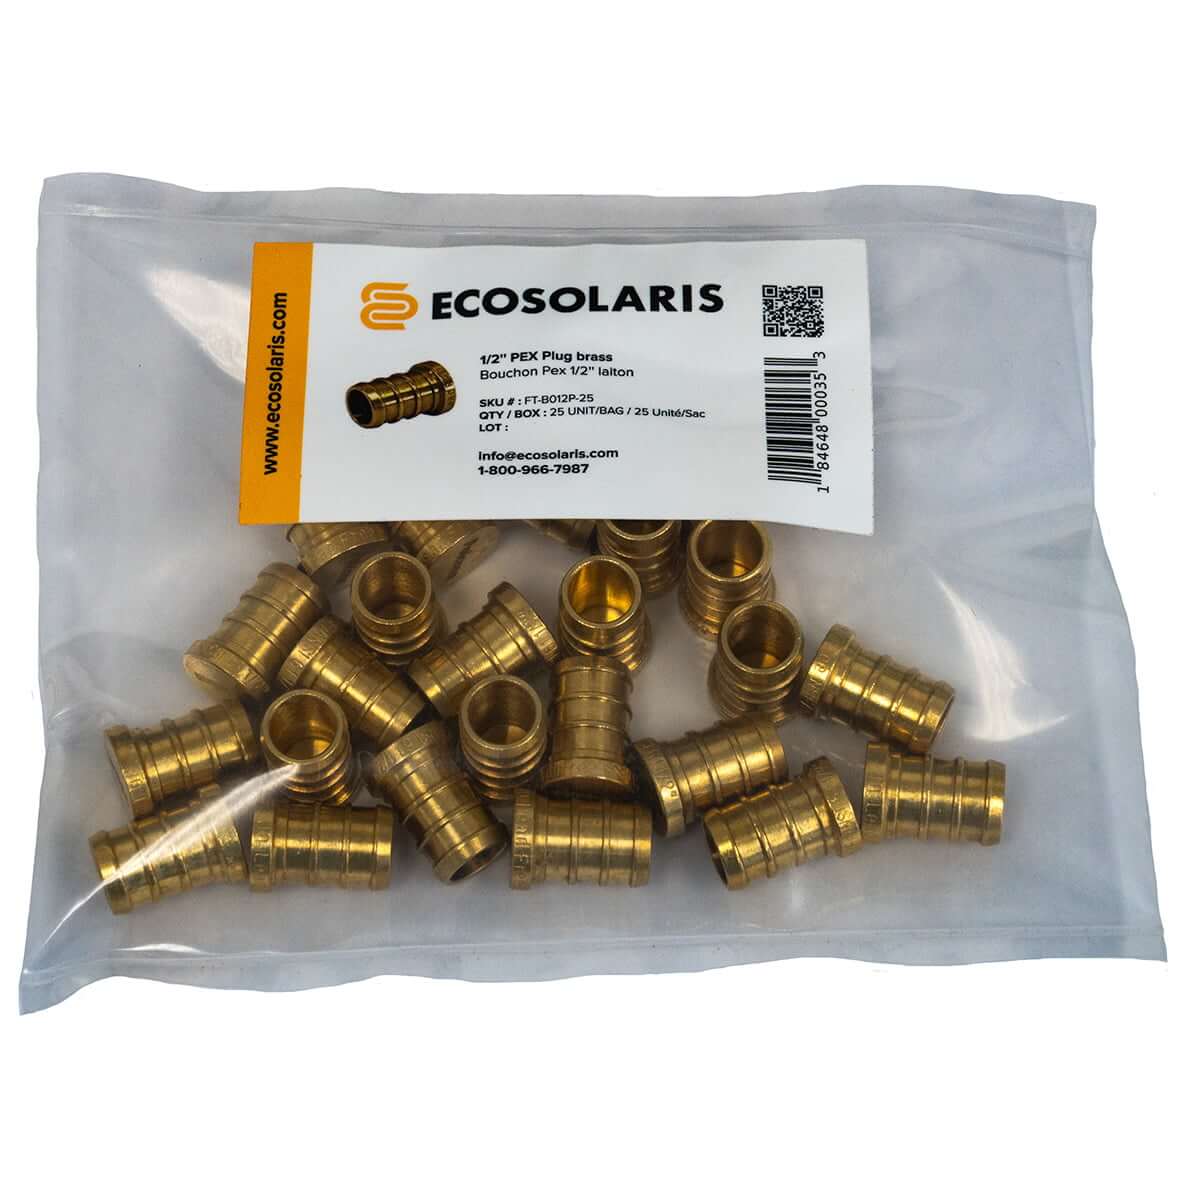 Nordik Radiant 1/2″ PEX Plug brass - bag of 25 units